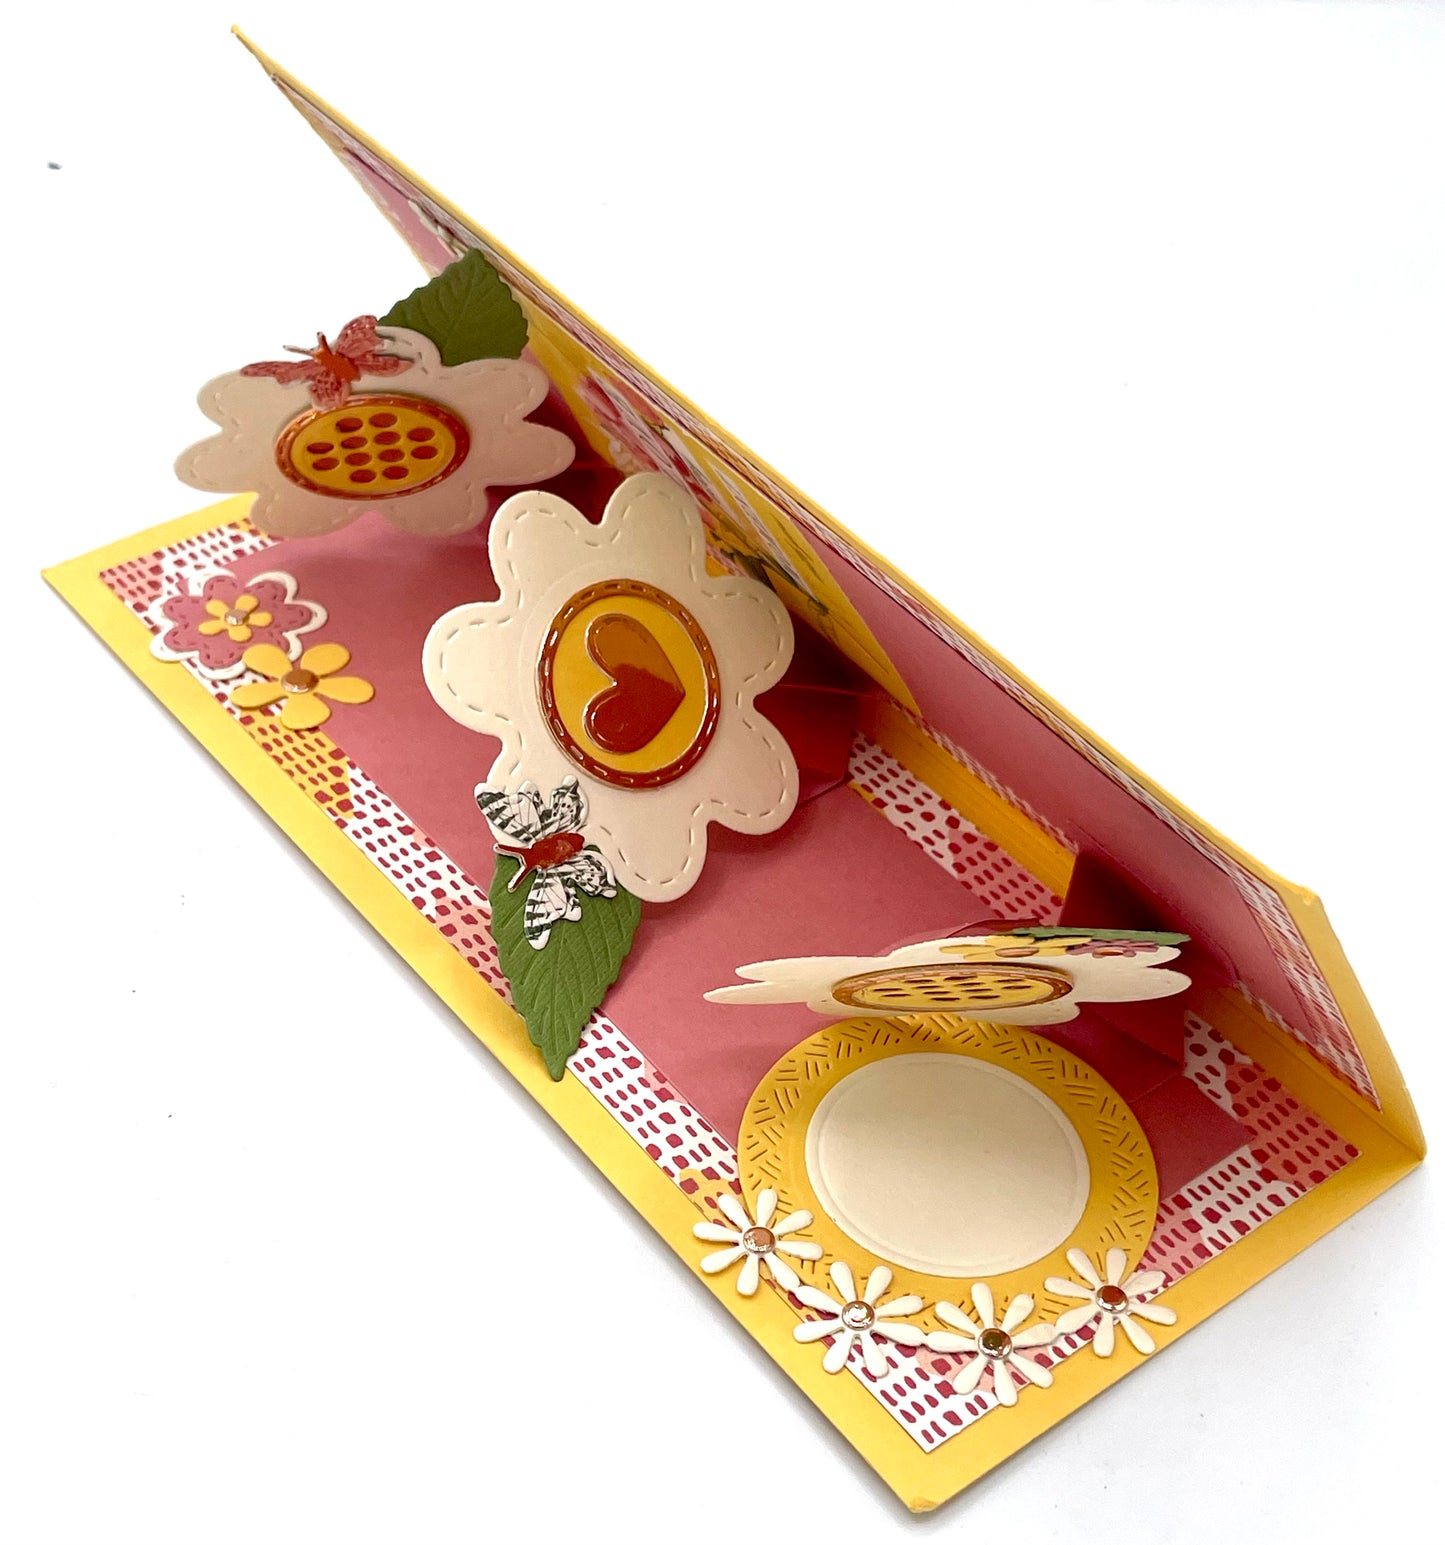 Karen Burniston - Card Kits - Triple Twist Flower Slimline Card